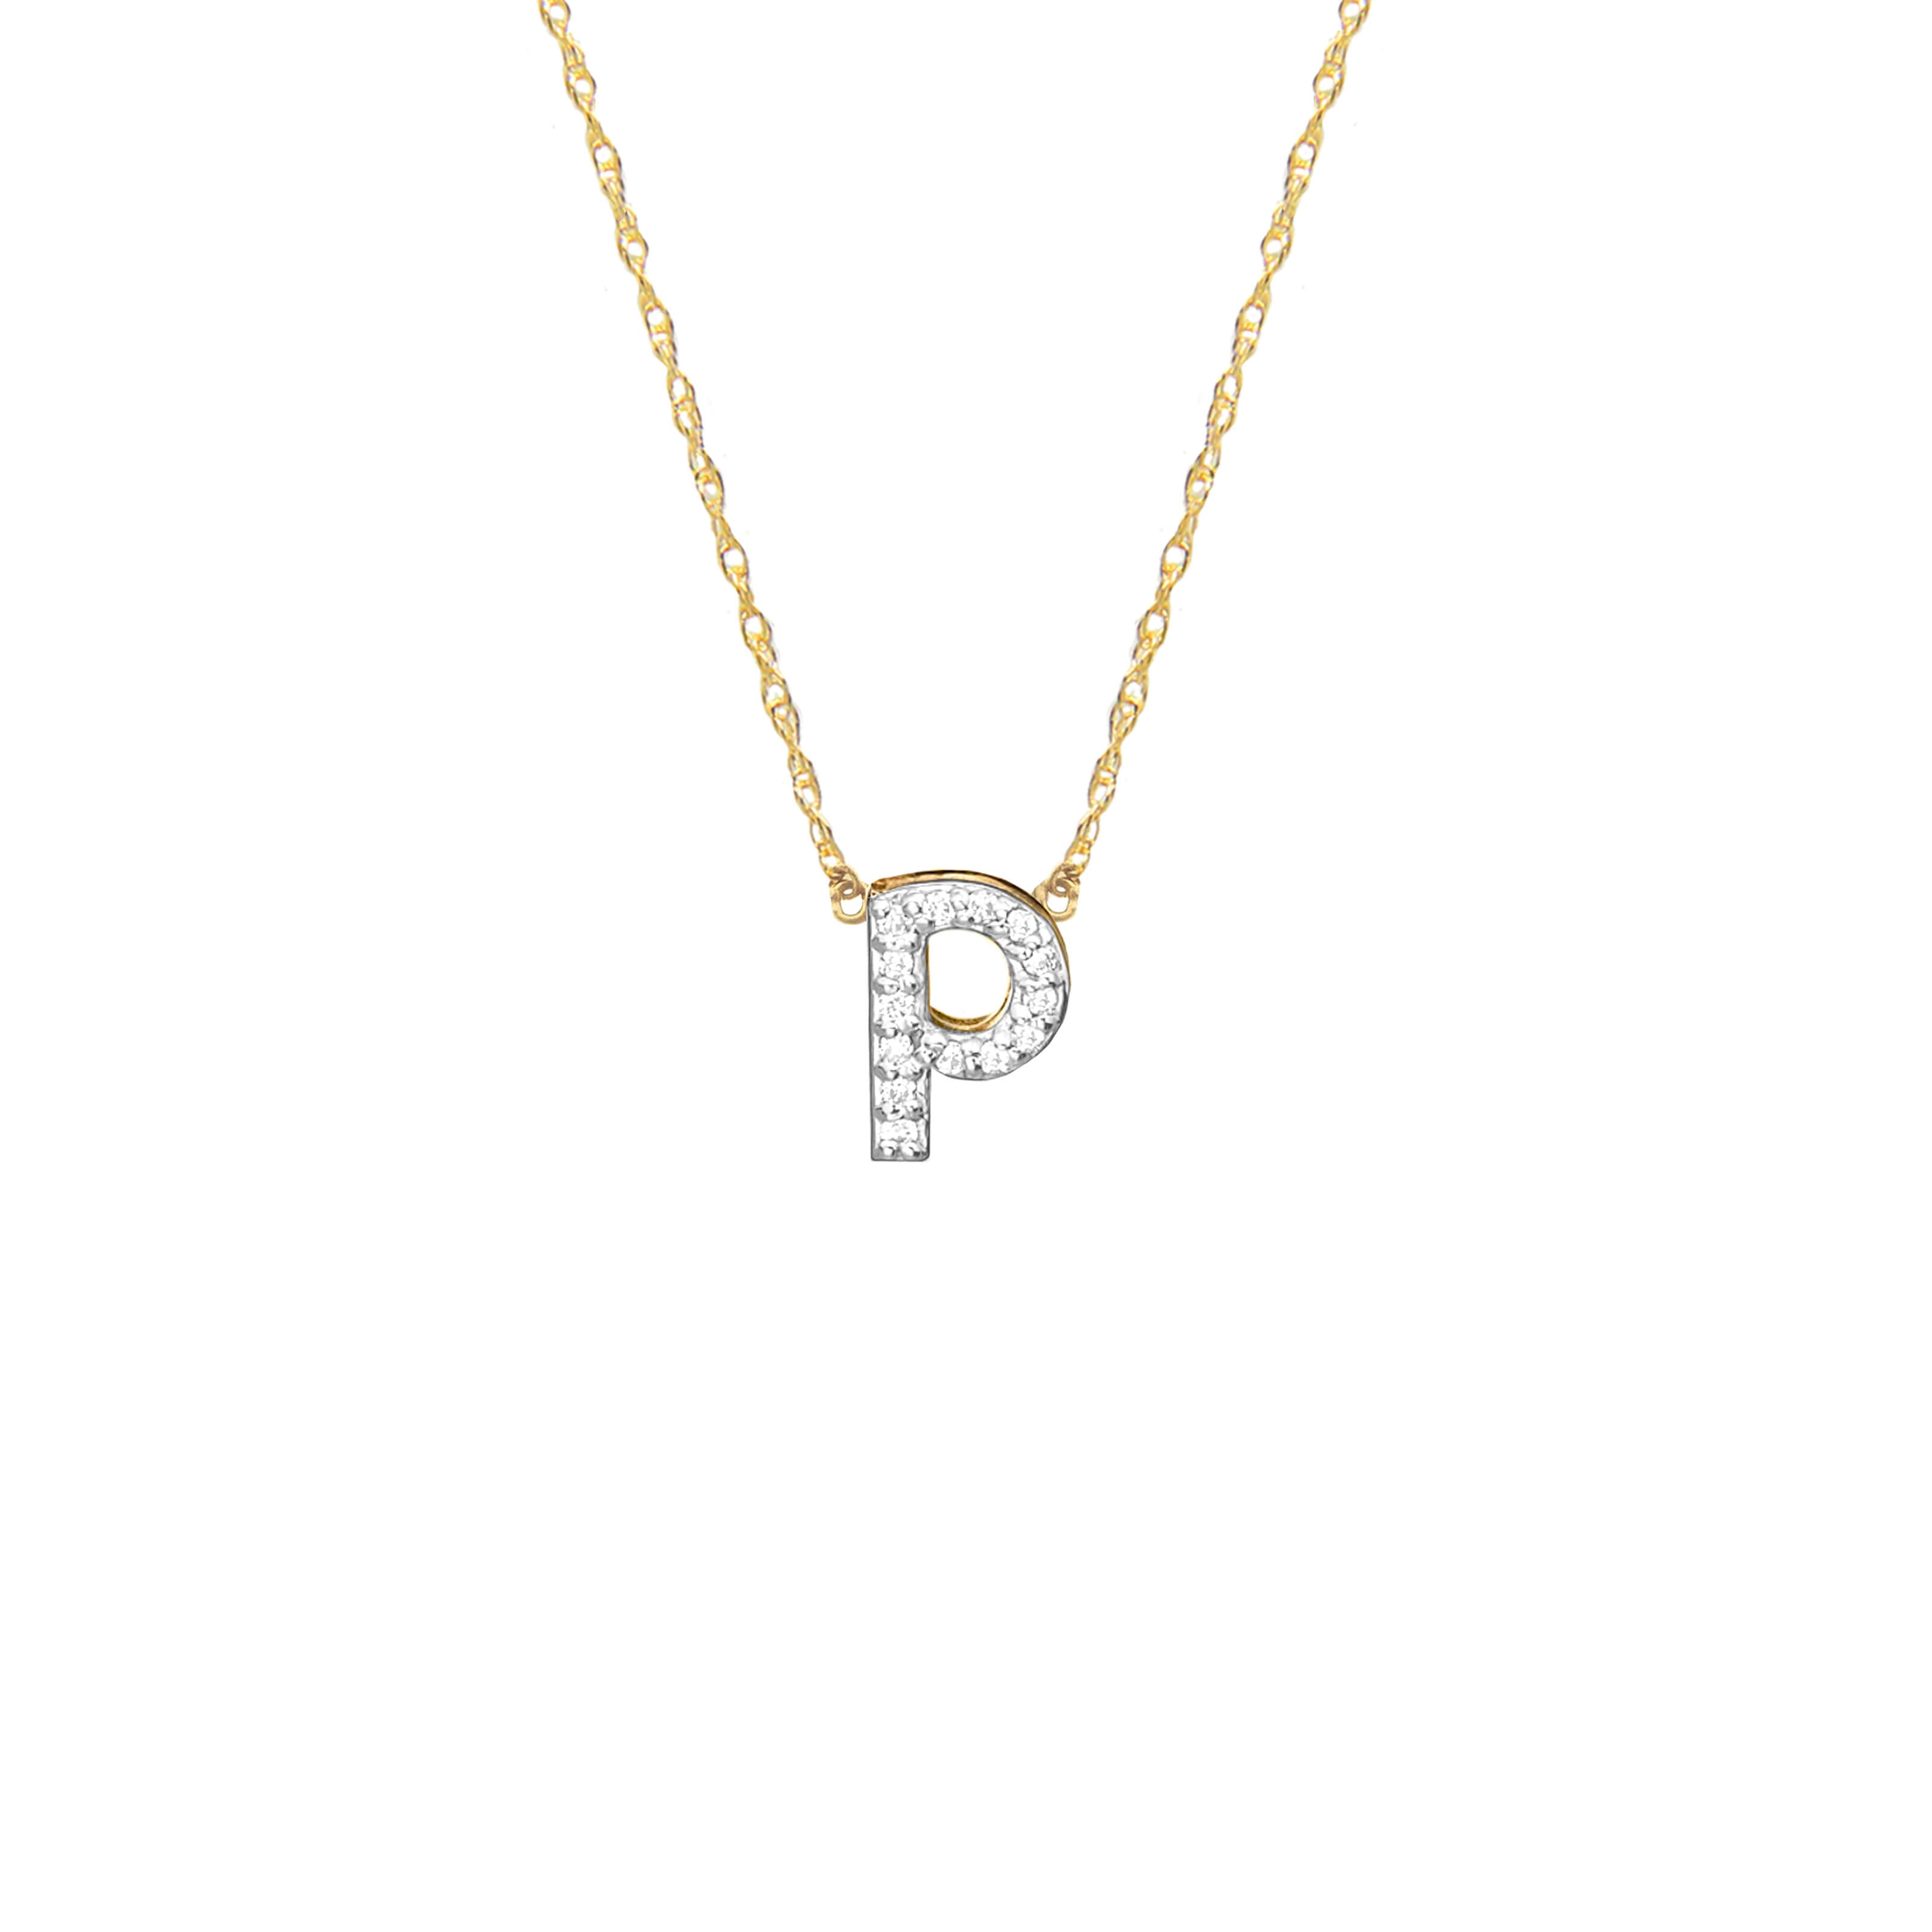 14K Gold Cheshire Handcut Monogram Necklace